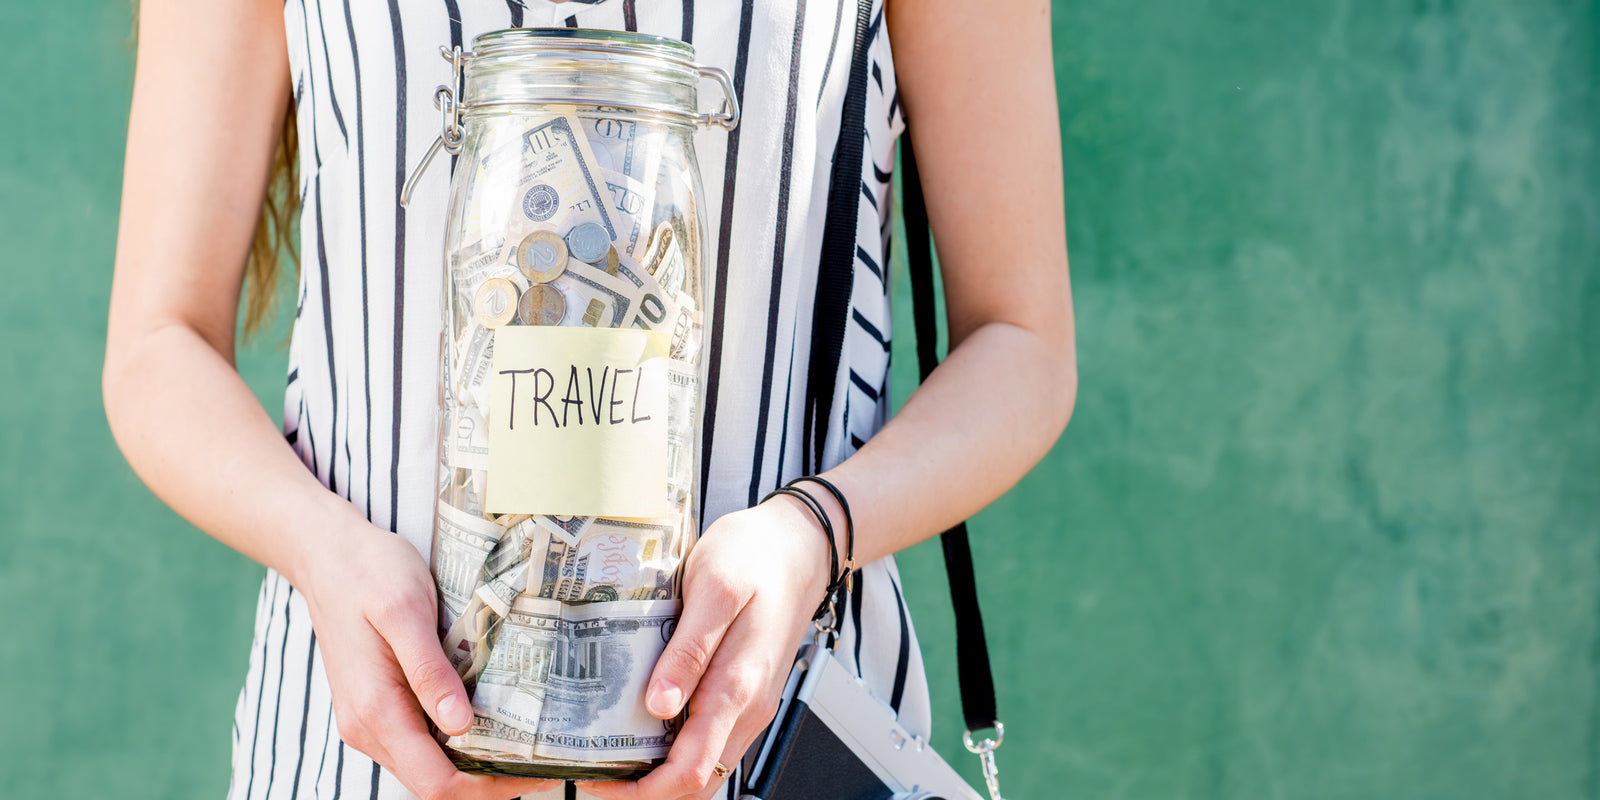 Woman holding travel jar